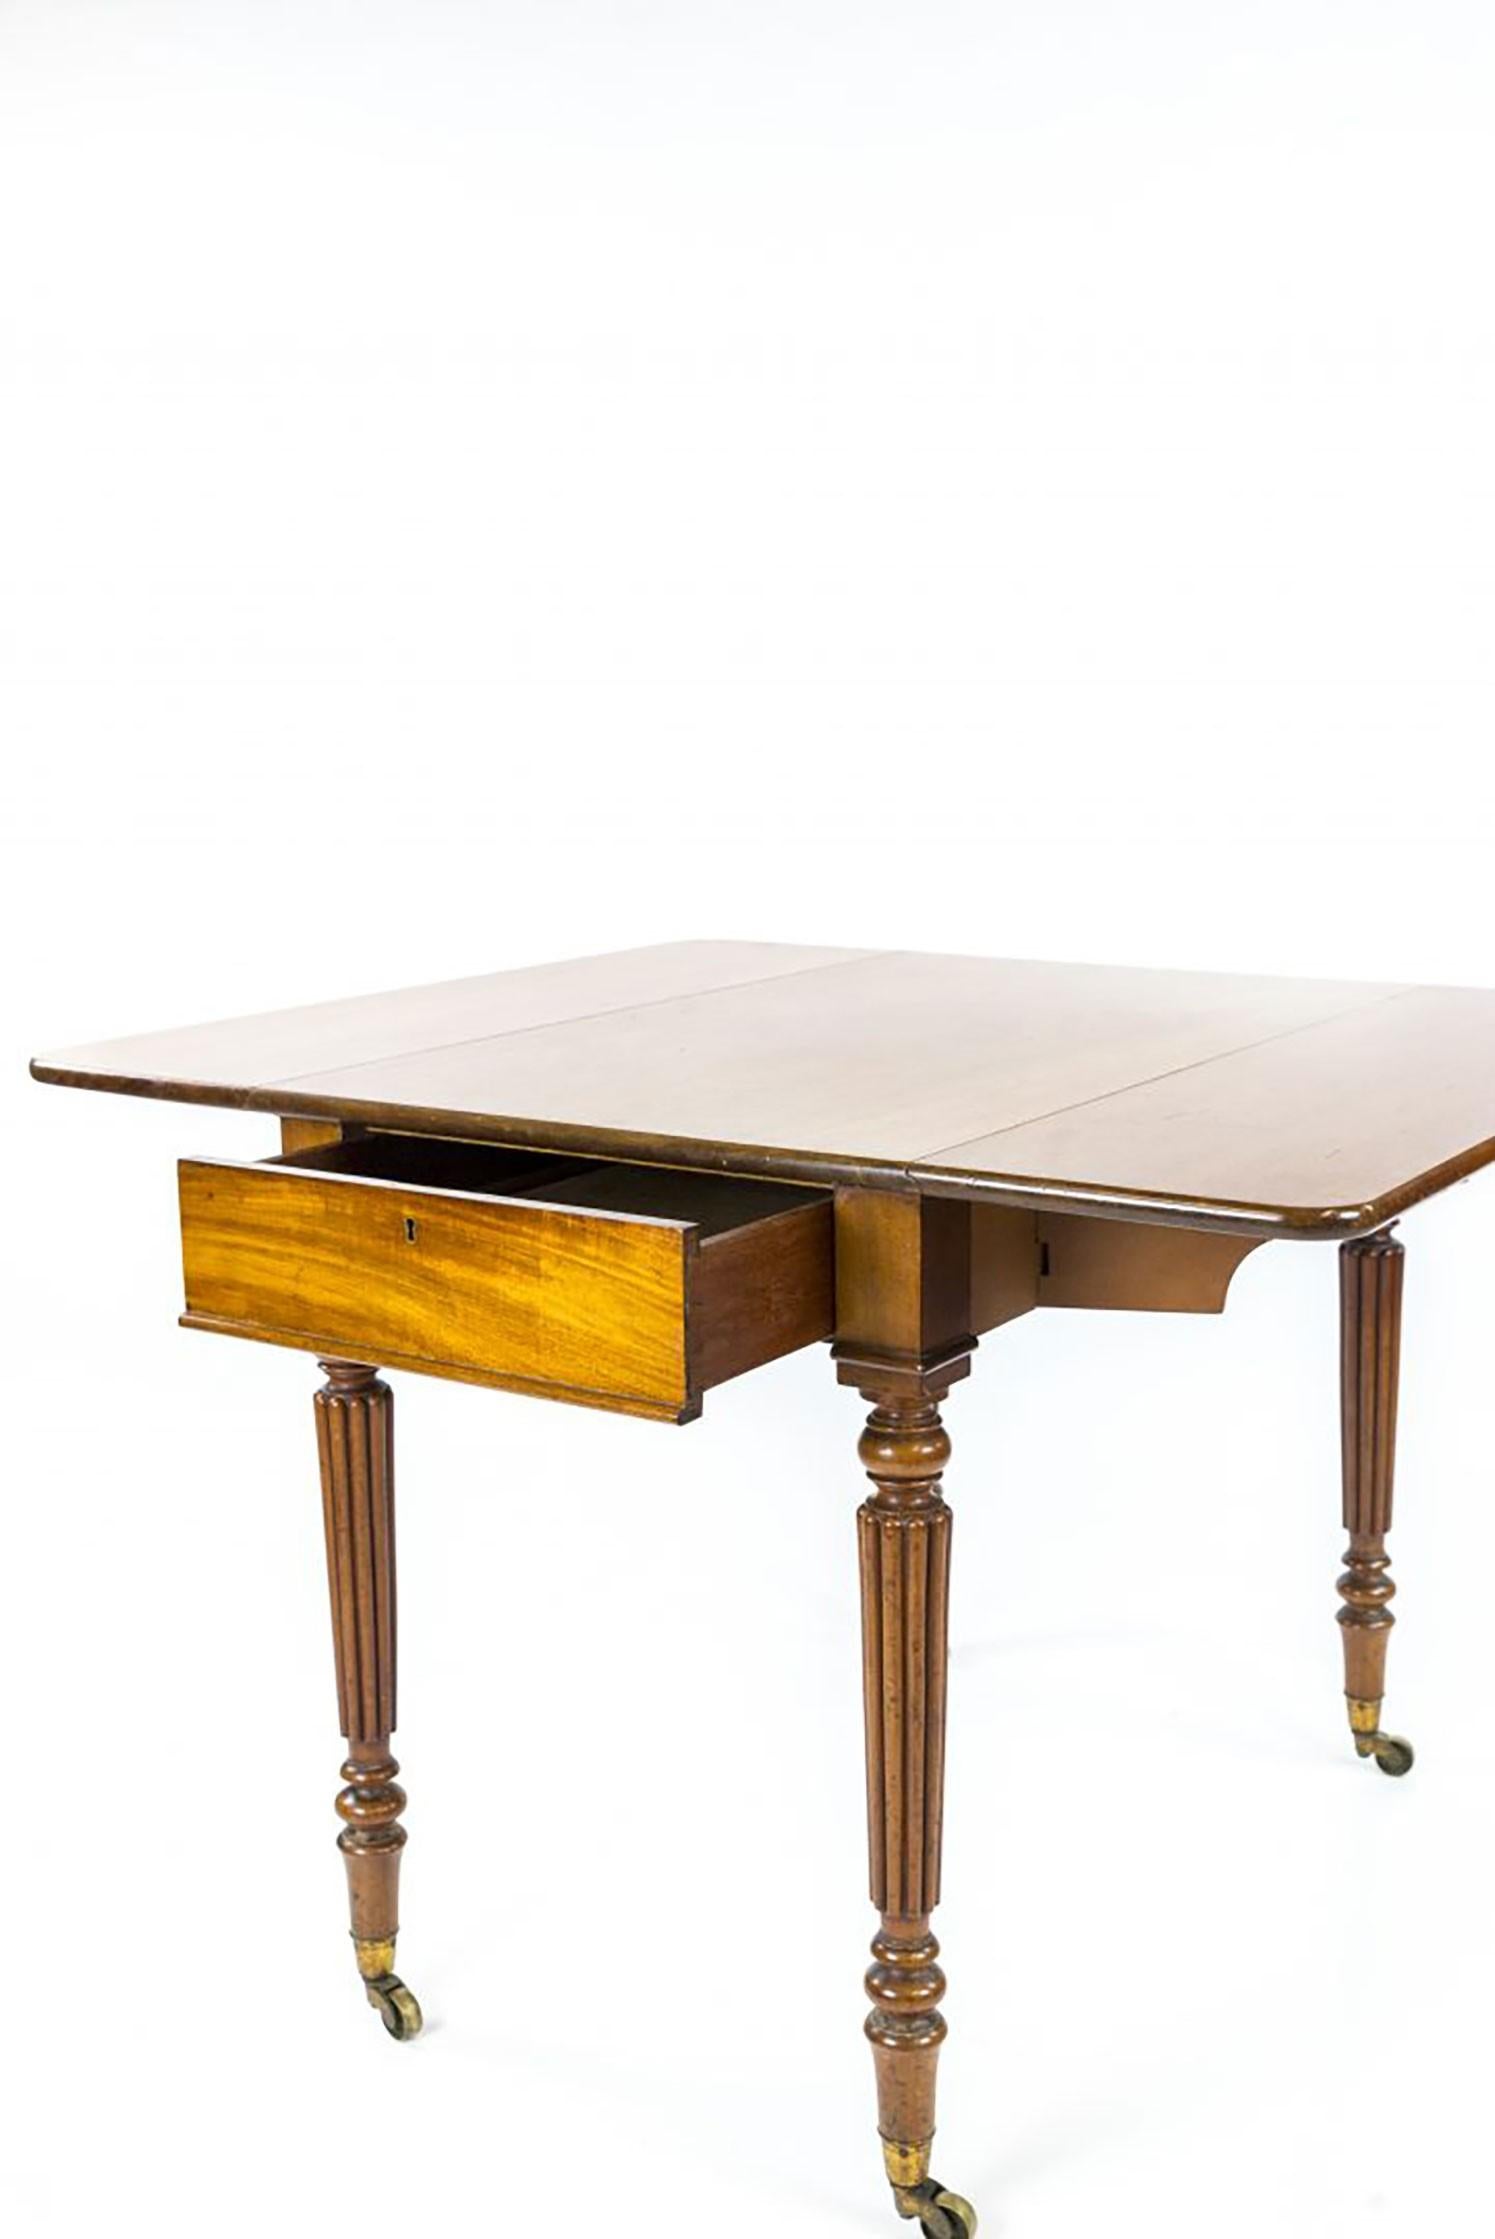 British George iv Mahogany Pembroke Table by Gillows